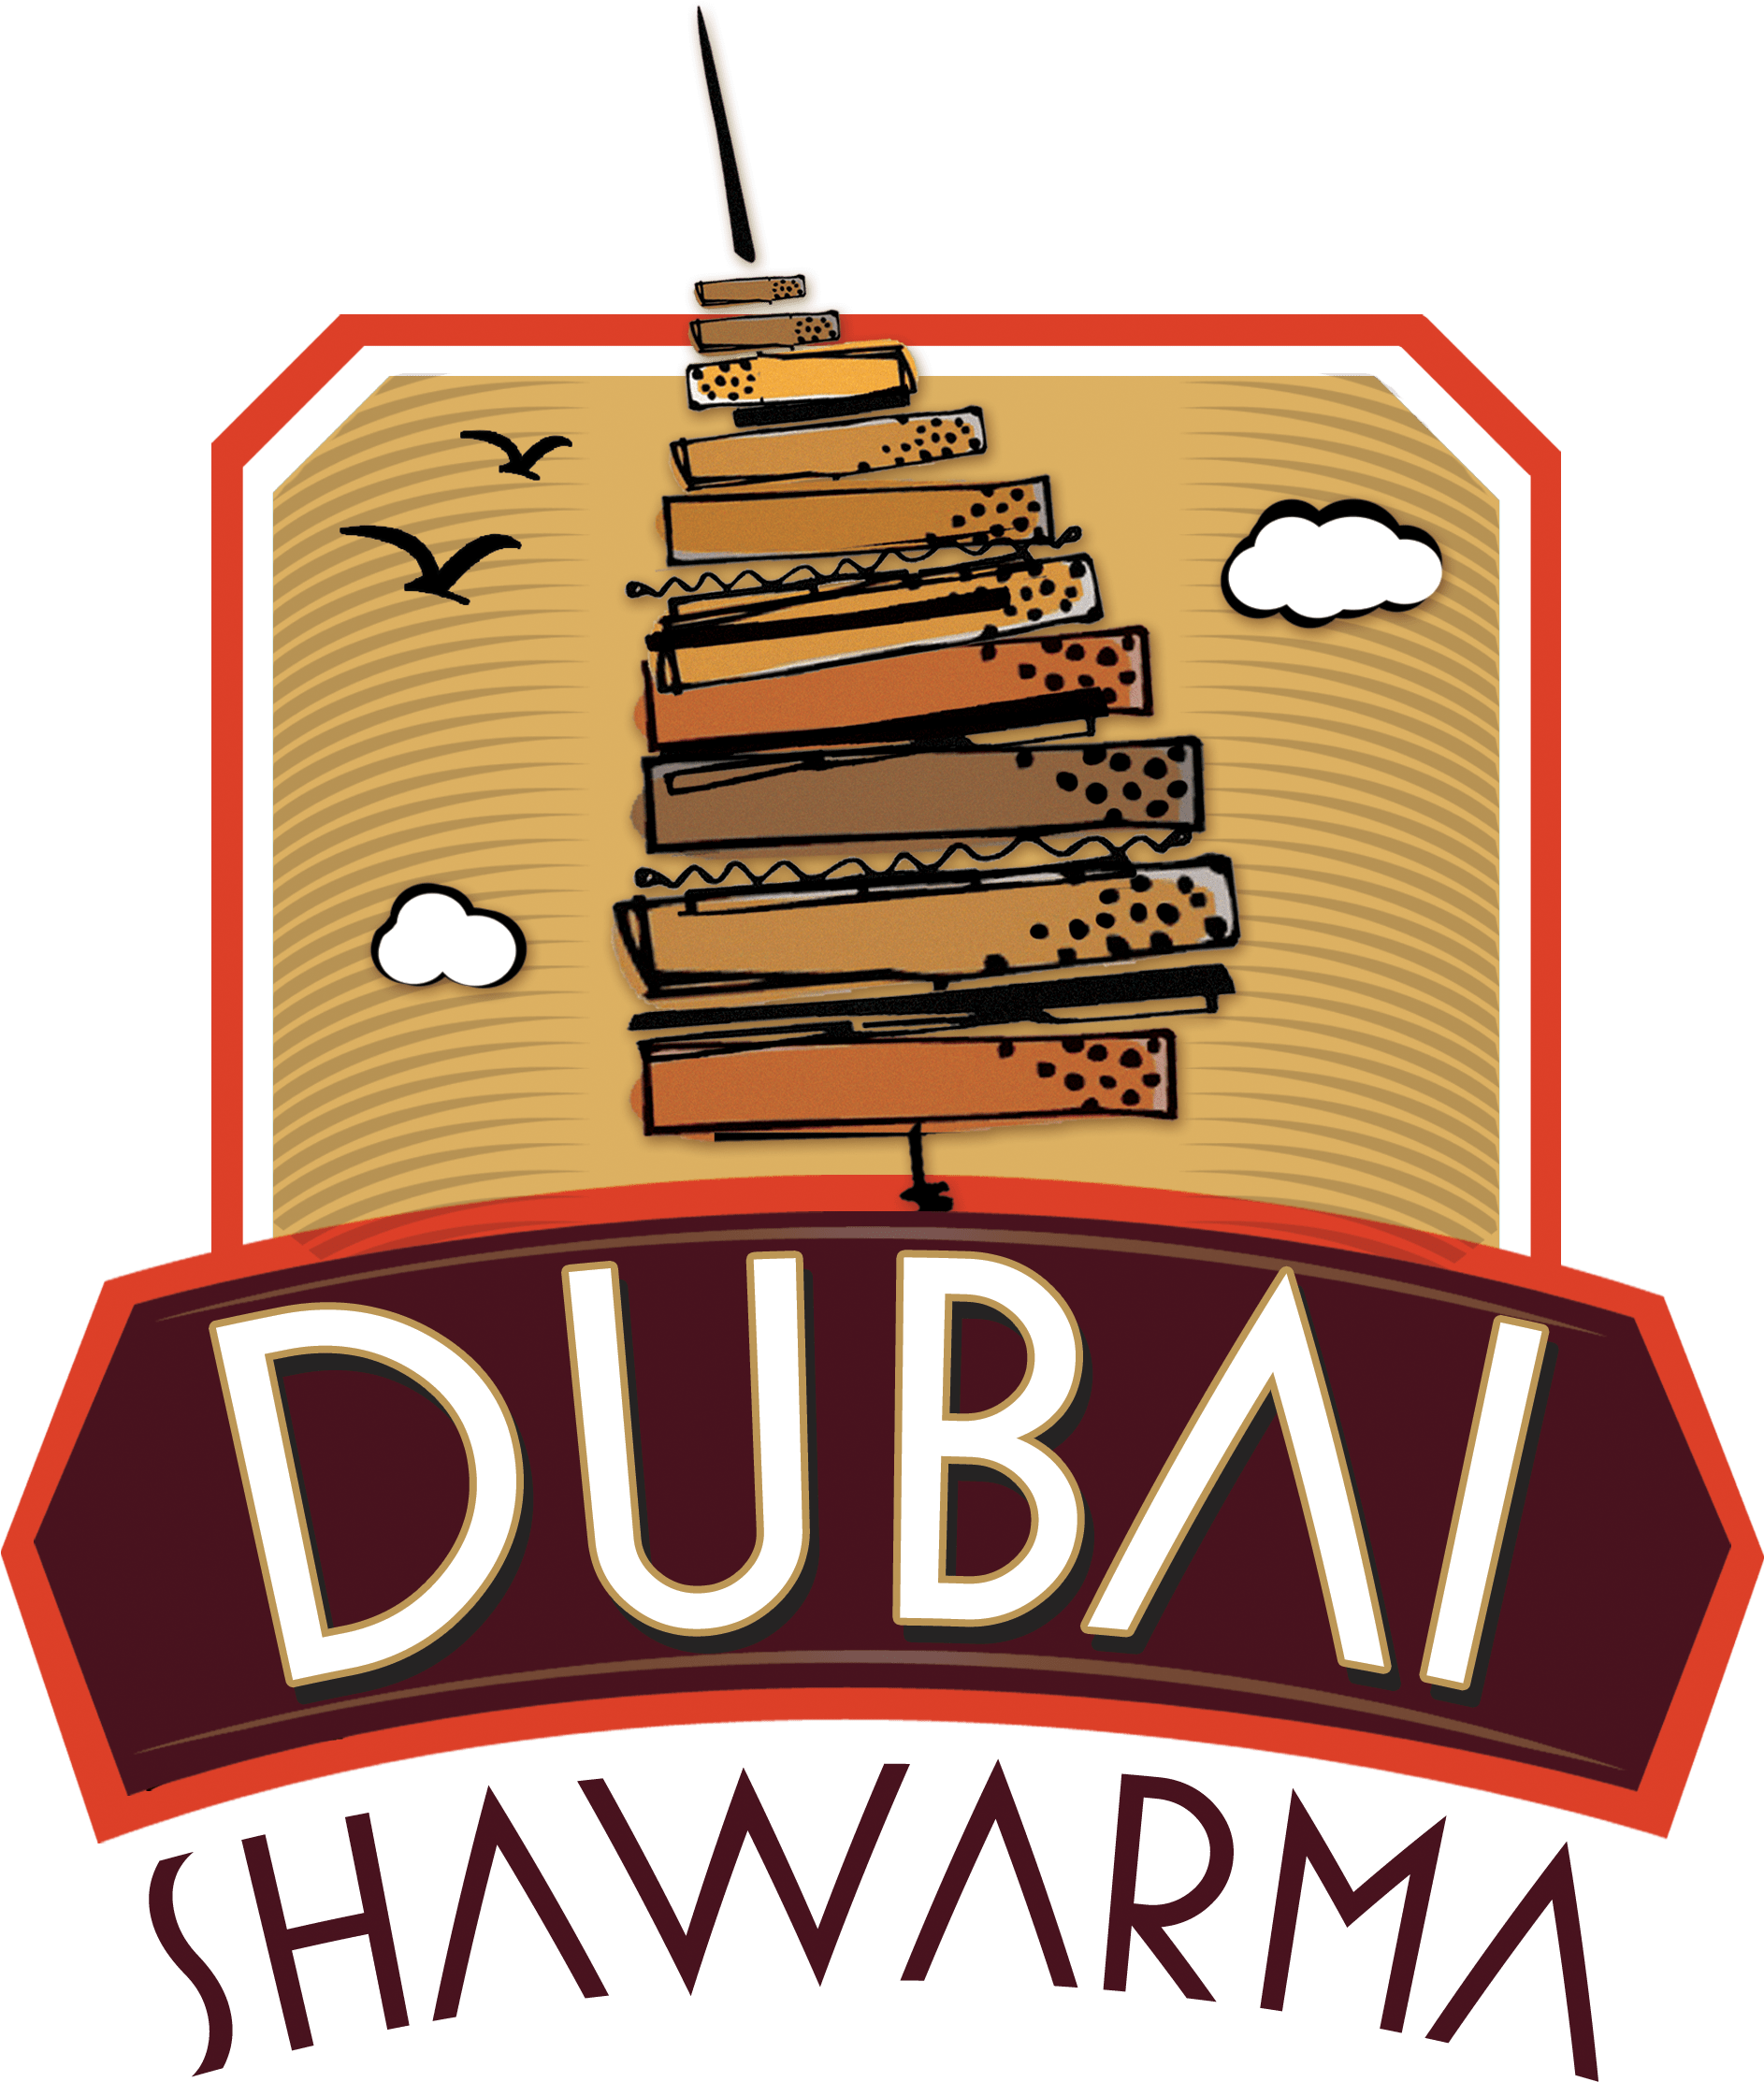 Dubai Shawarma Karachi Food Deals - Karachi Food Point Restaurant (2016x2404)